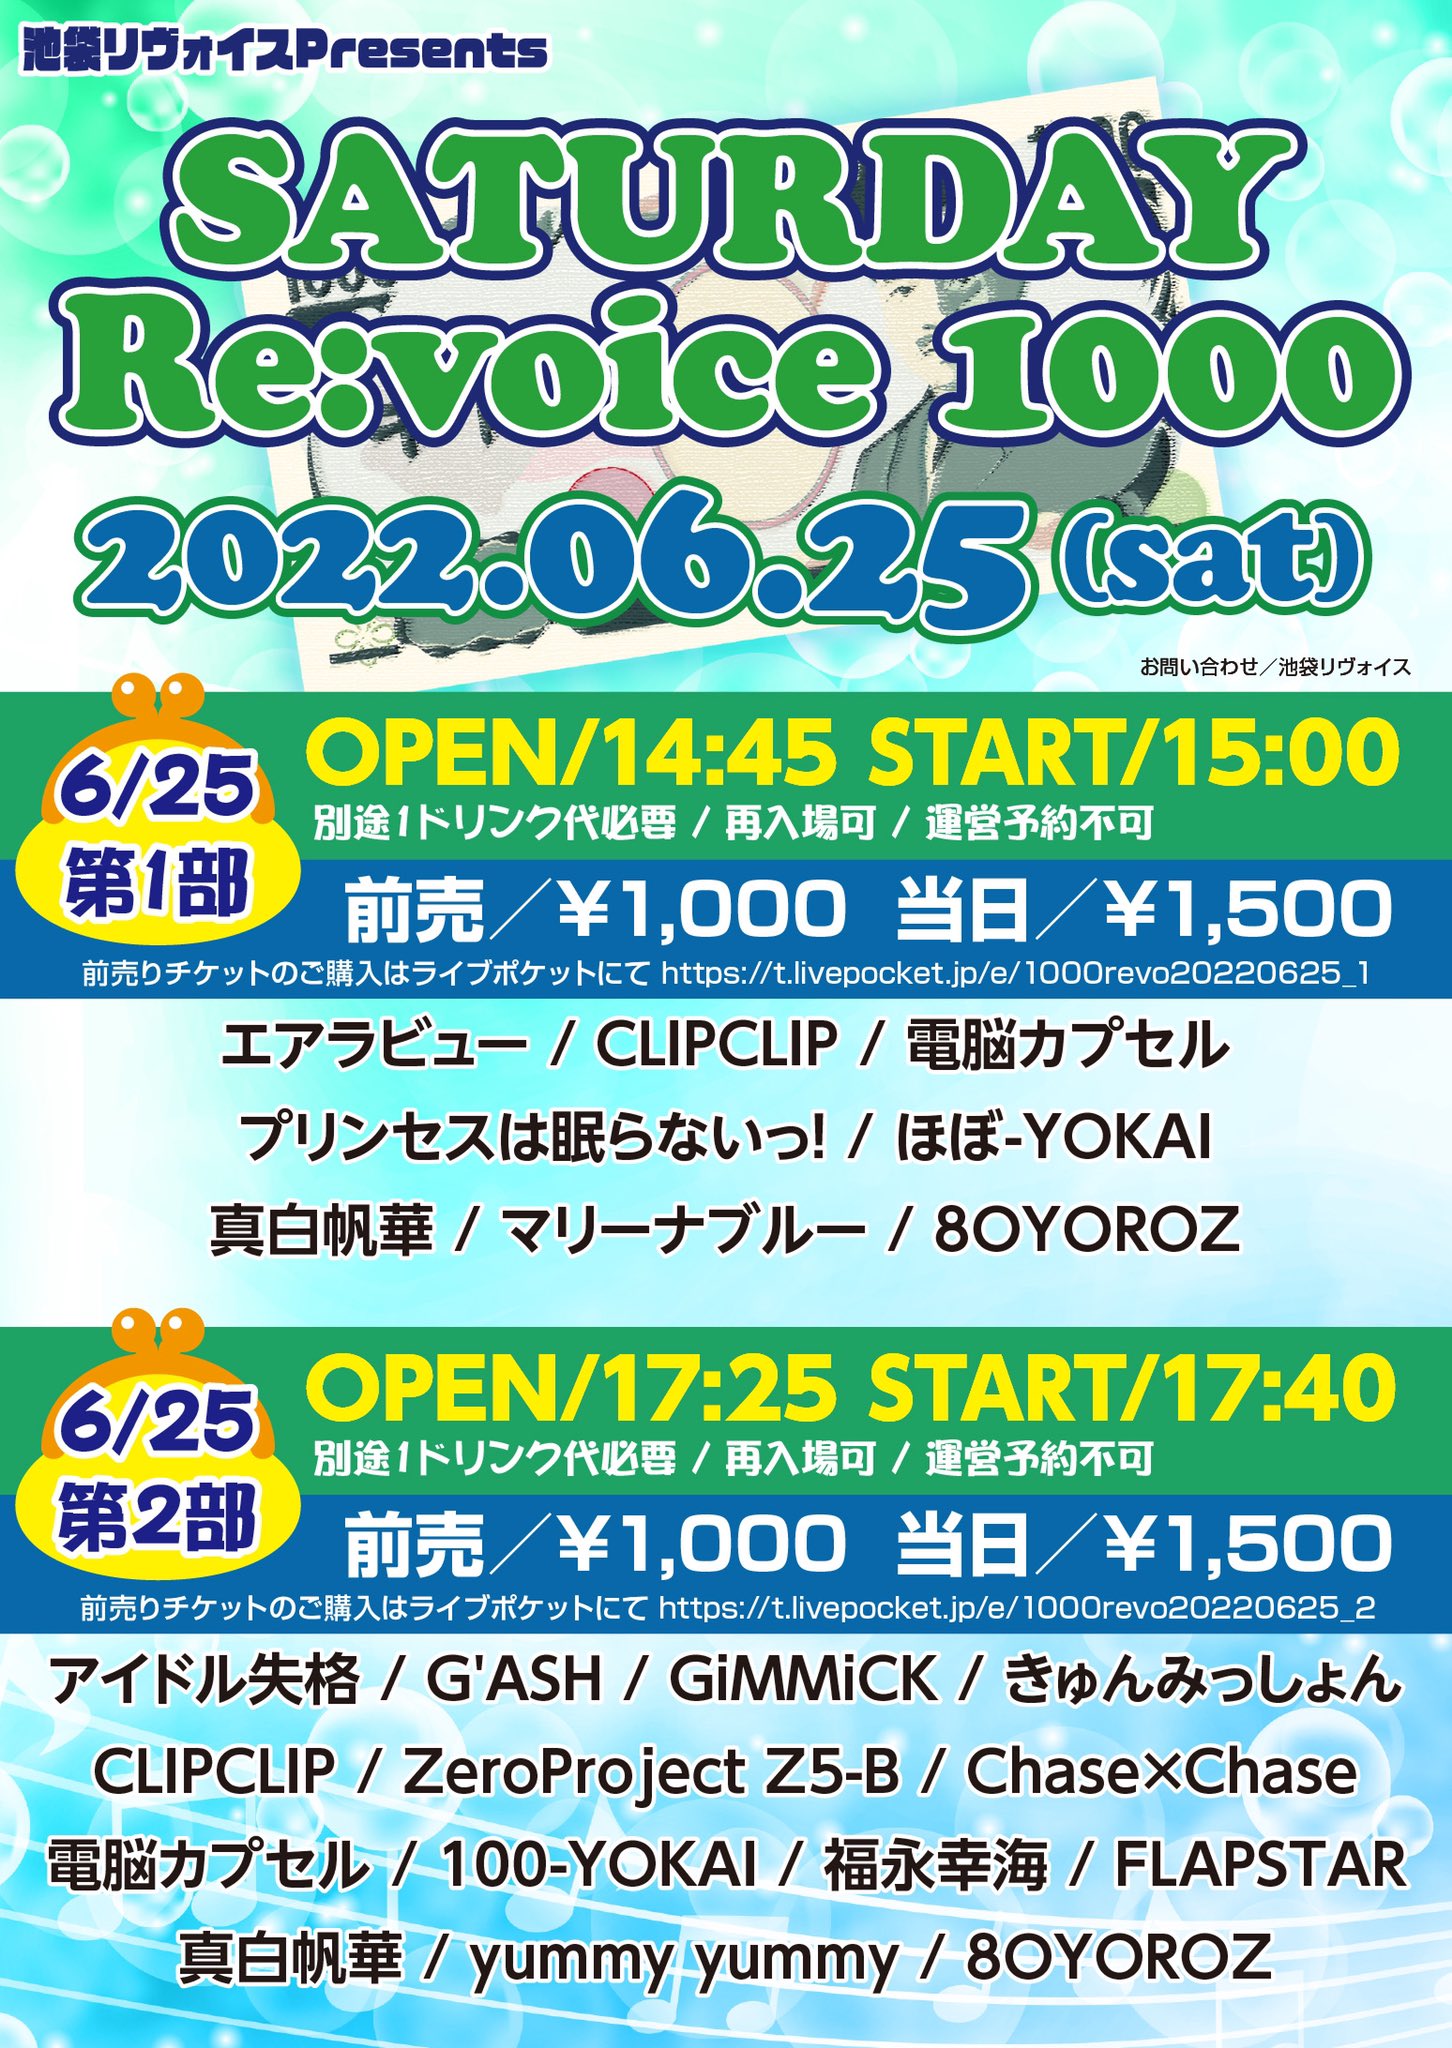 【第一部】SATURDAY Re:voice 1000